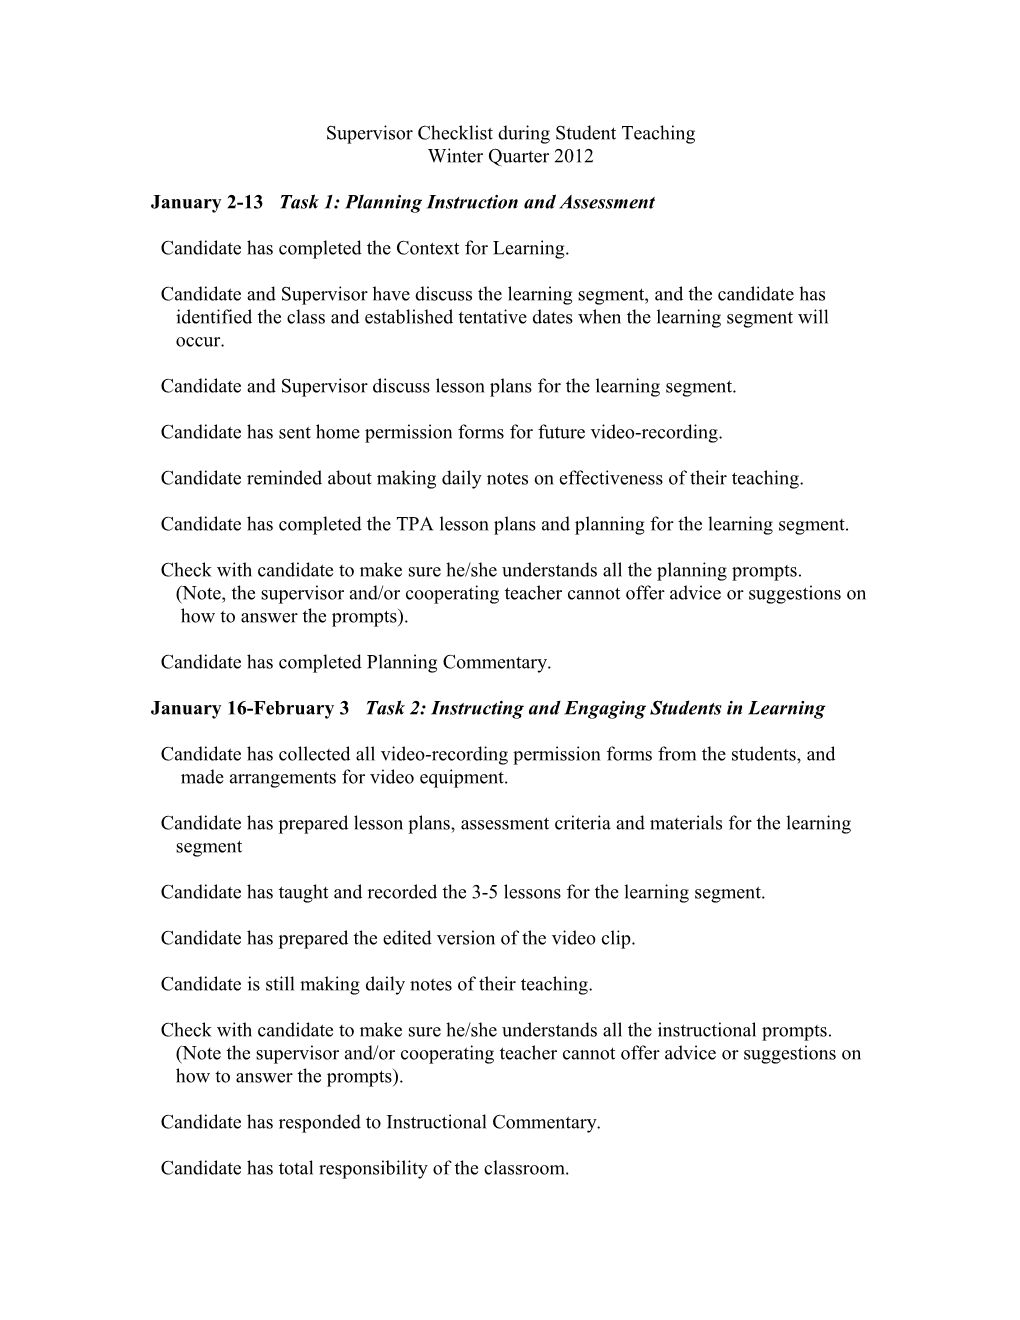 Supervisor Checklist During Student Teaching